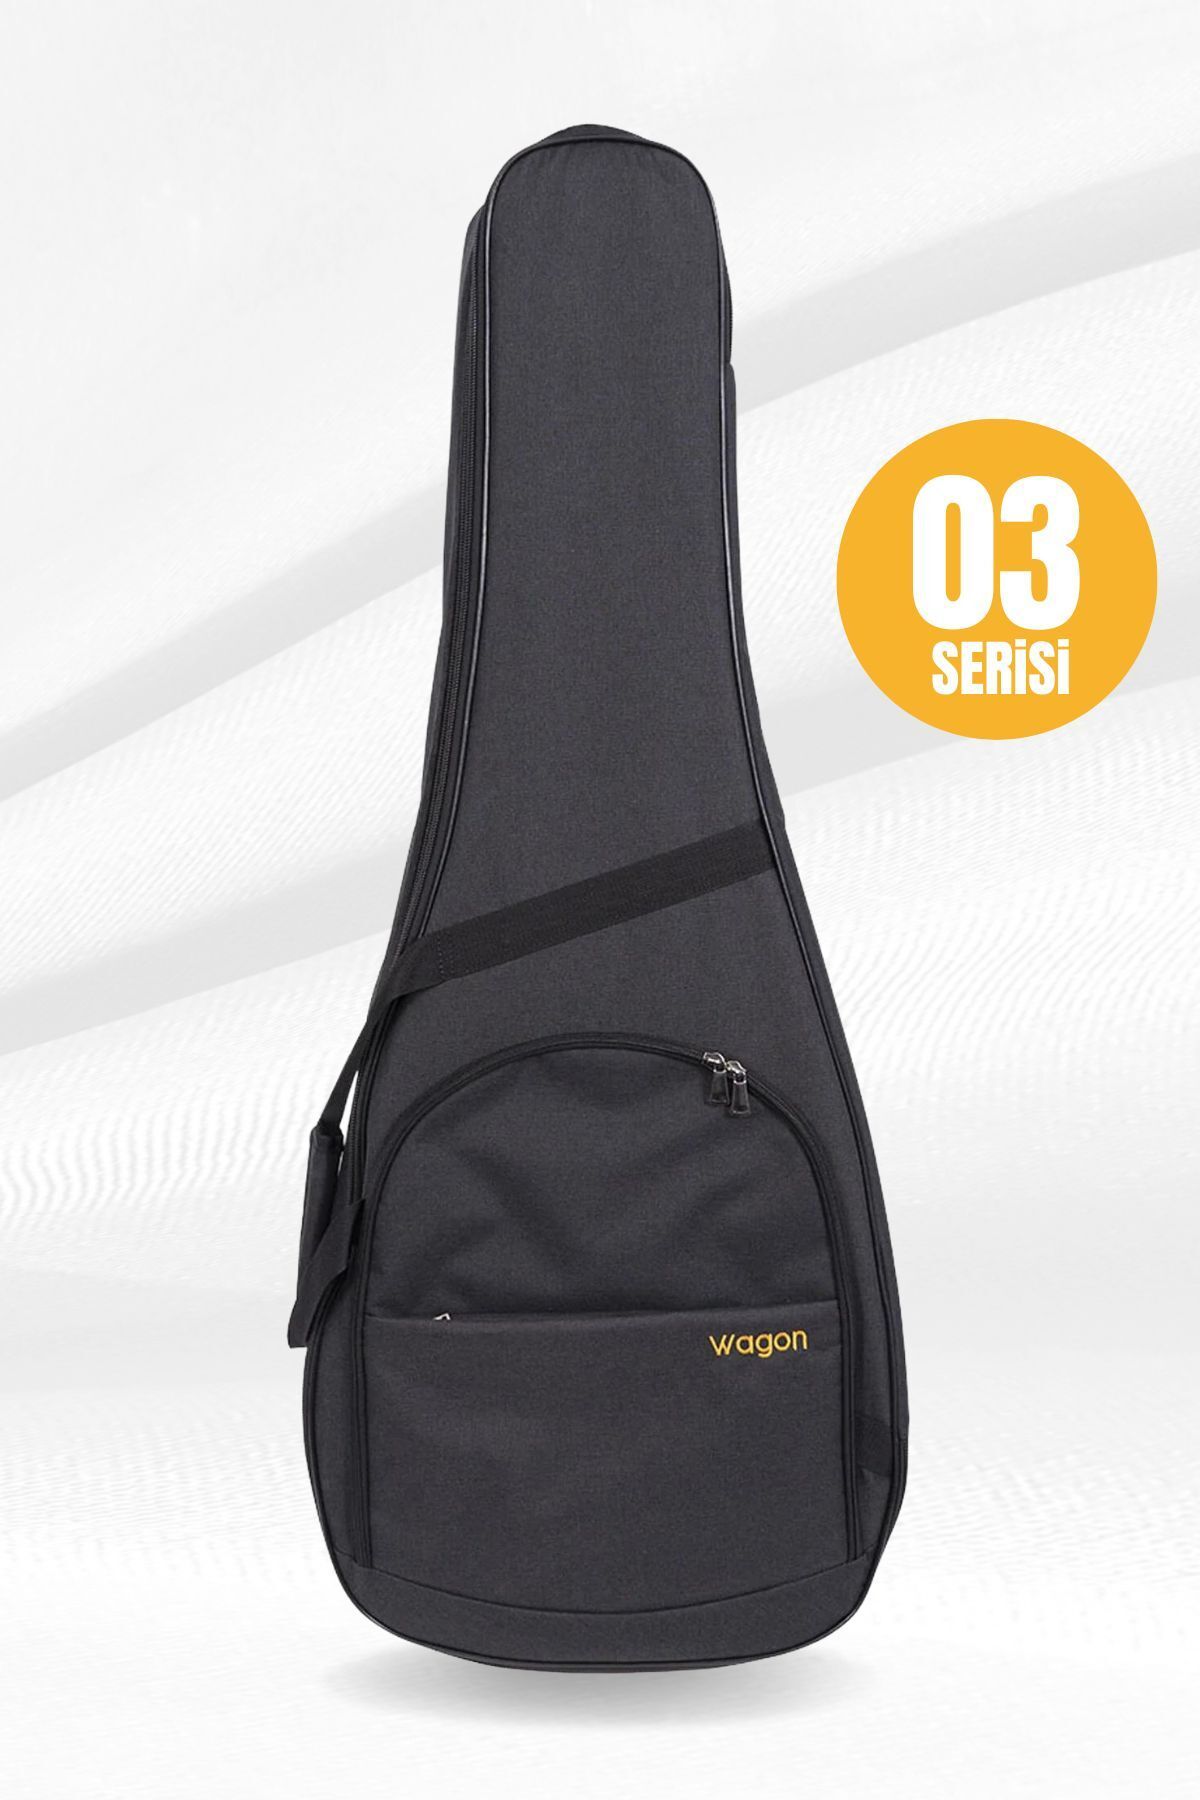 Wagon 03 Serisi Klasik Gitar Çantası - Siyah